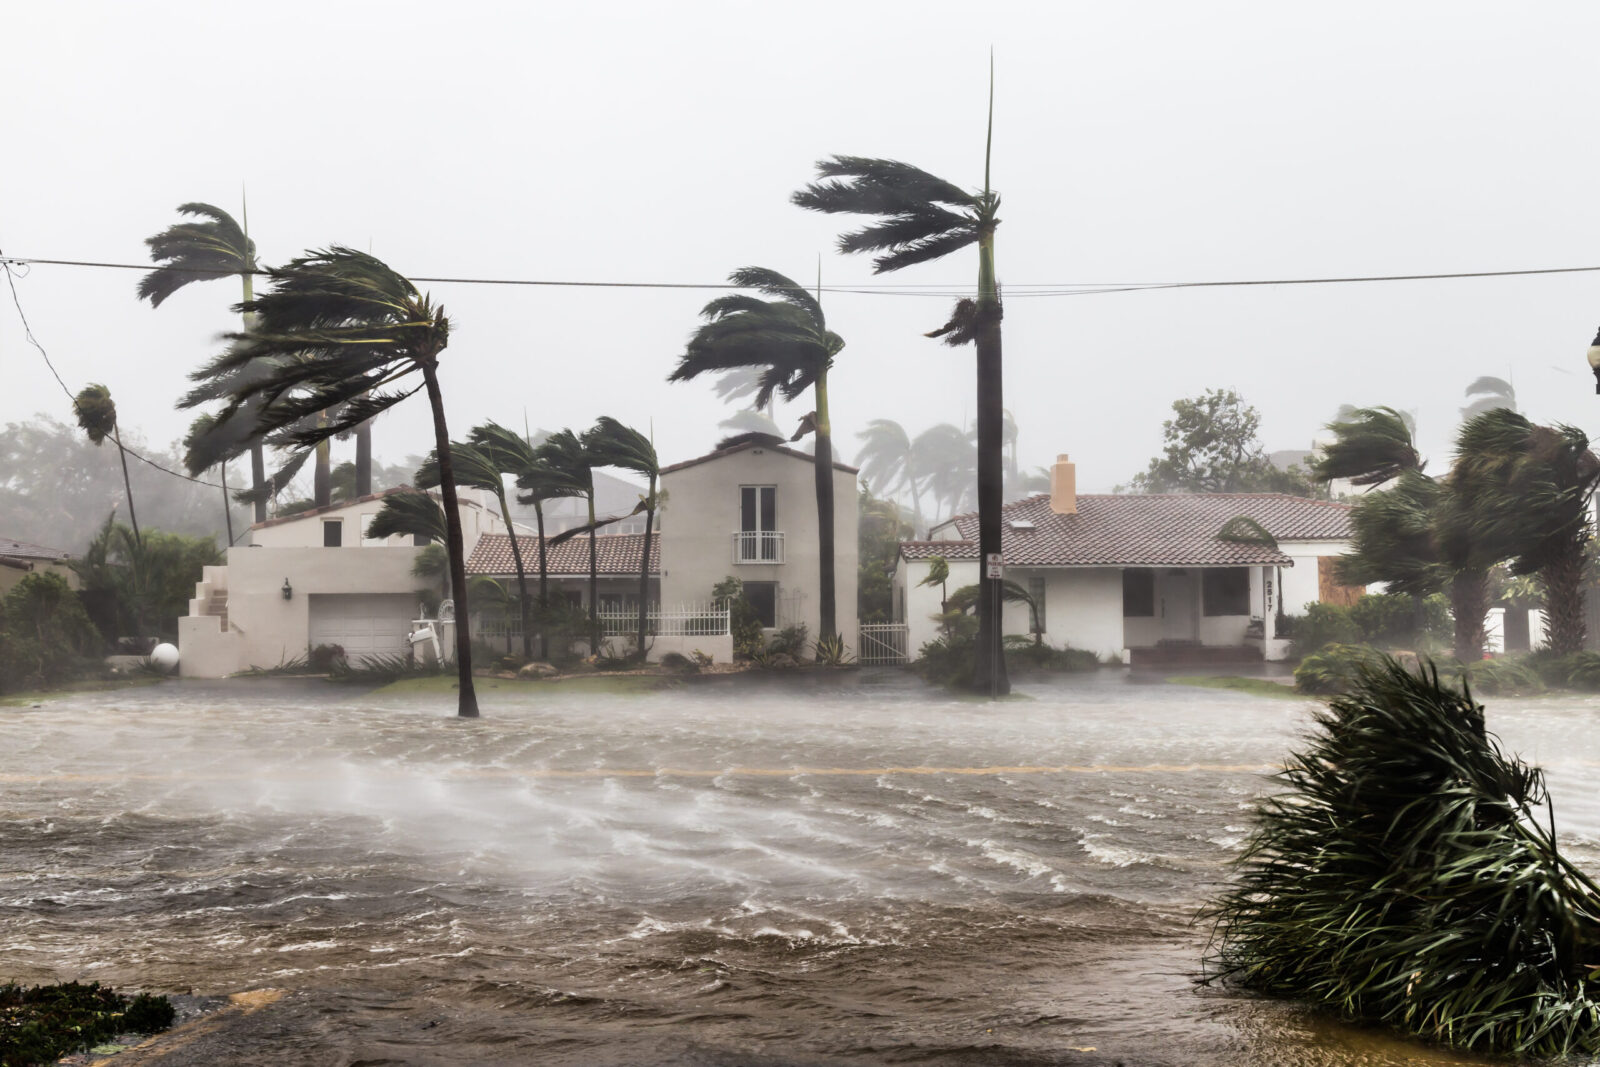 flood and high winds in a tropical neighborhood - hurricane preparedness tips